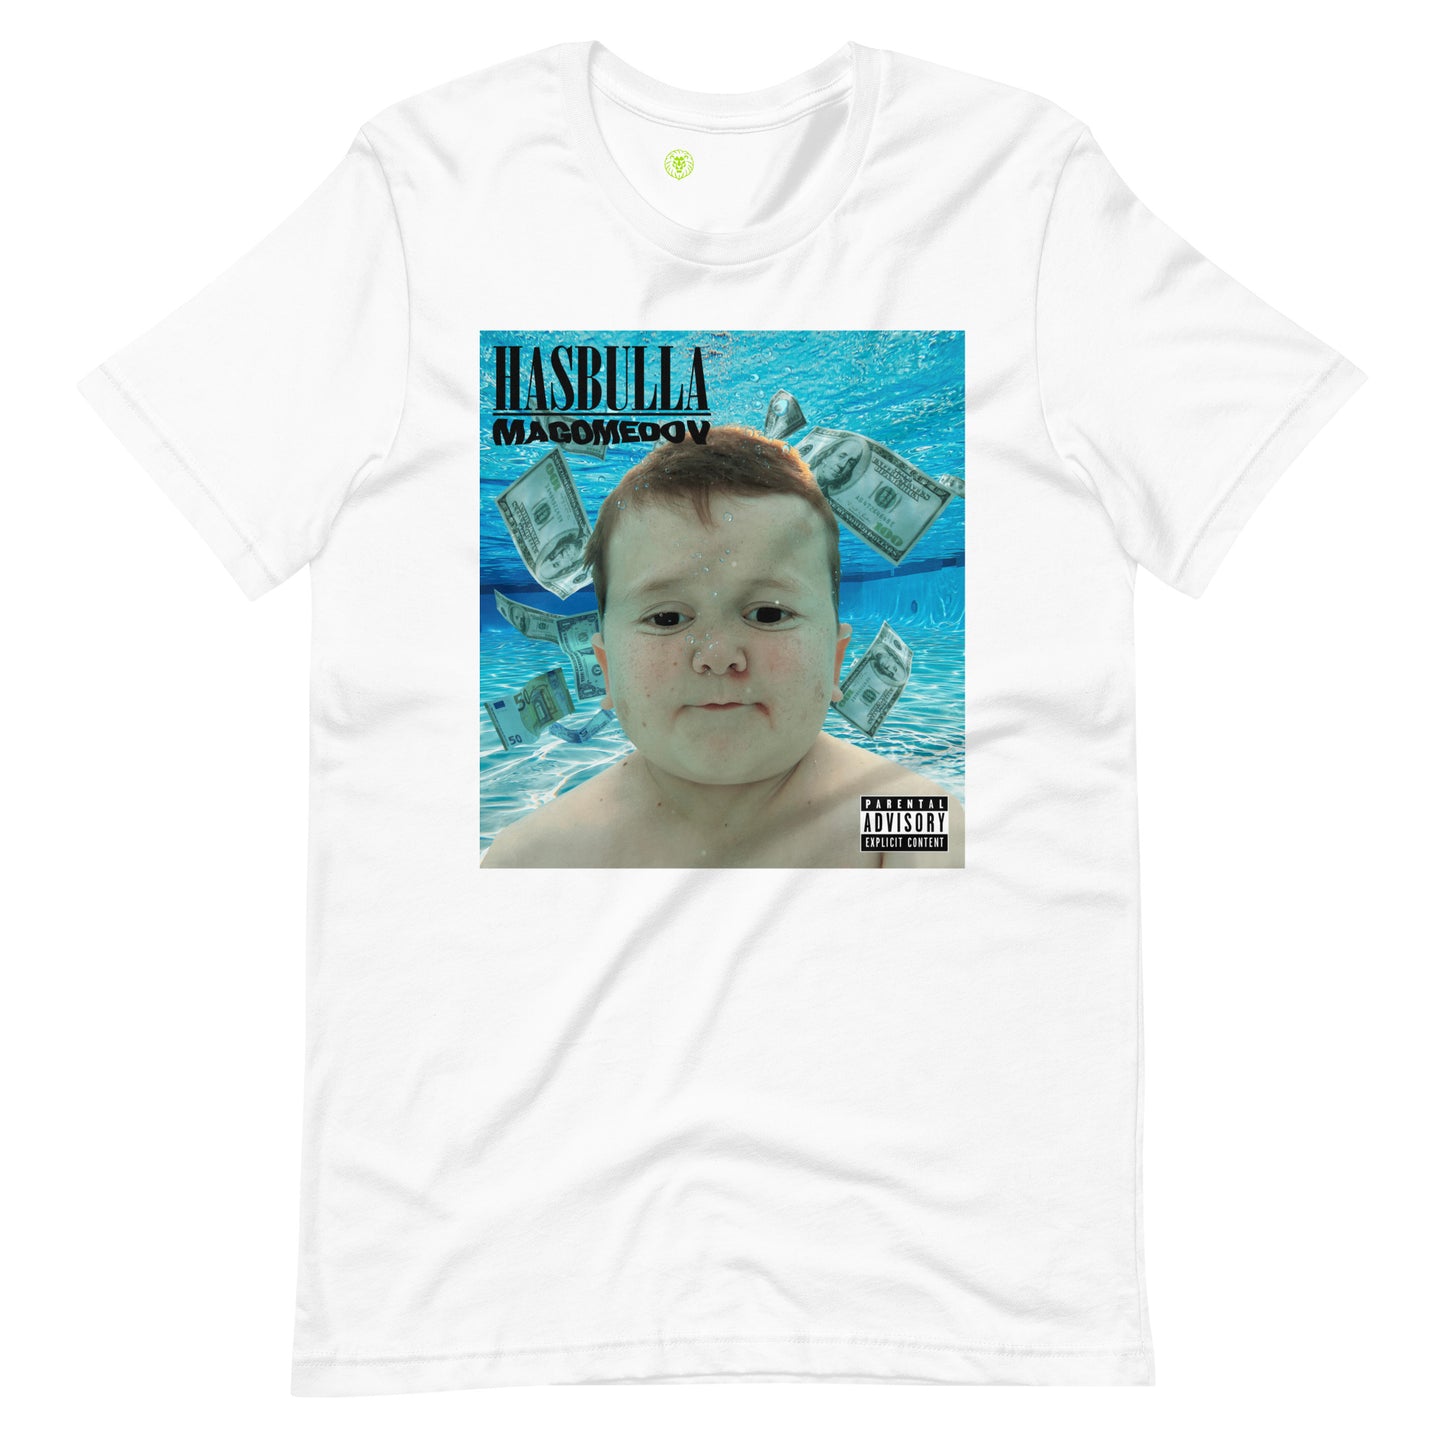 Hasbulla Nirvana Parody t-shirt